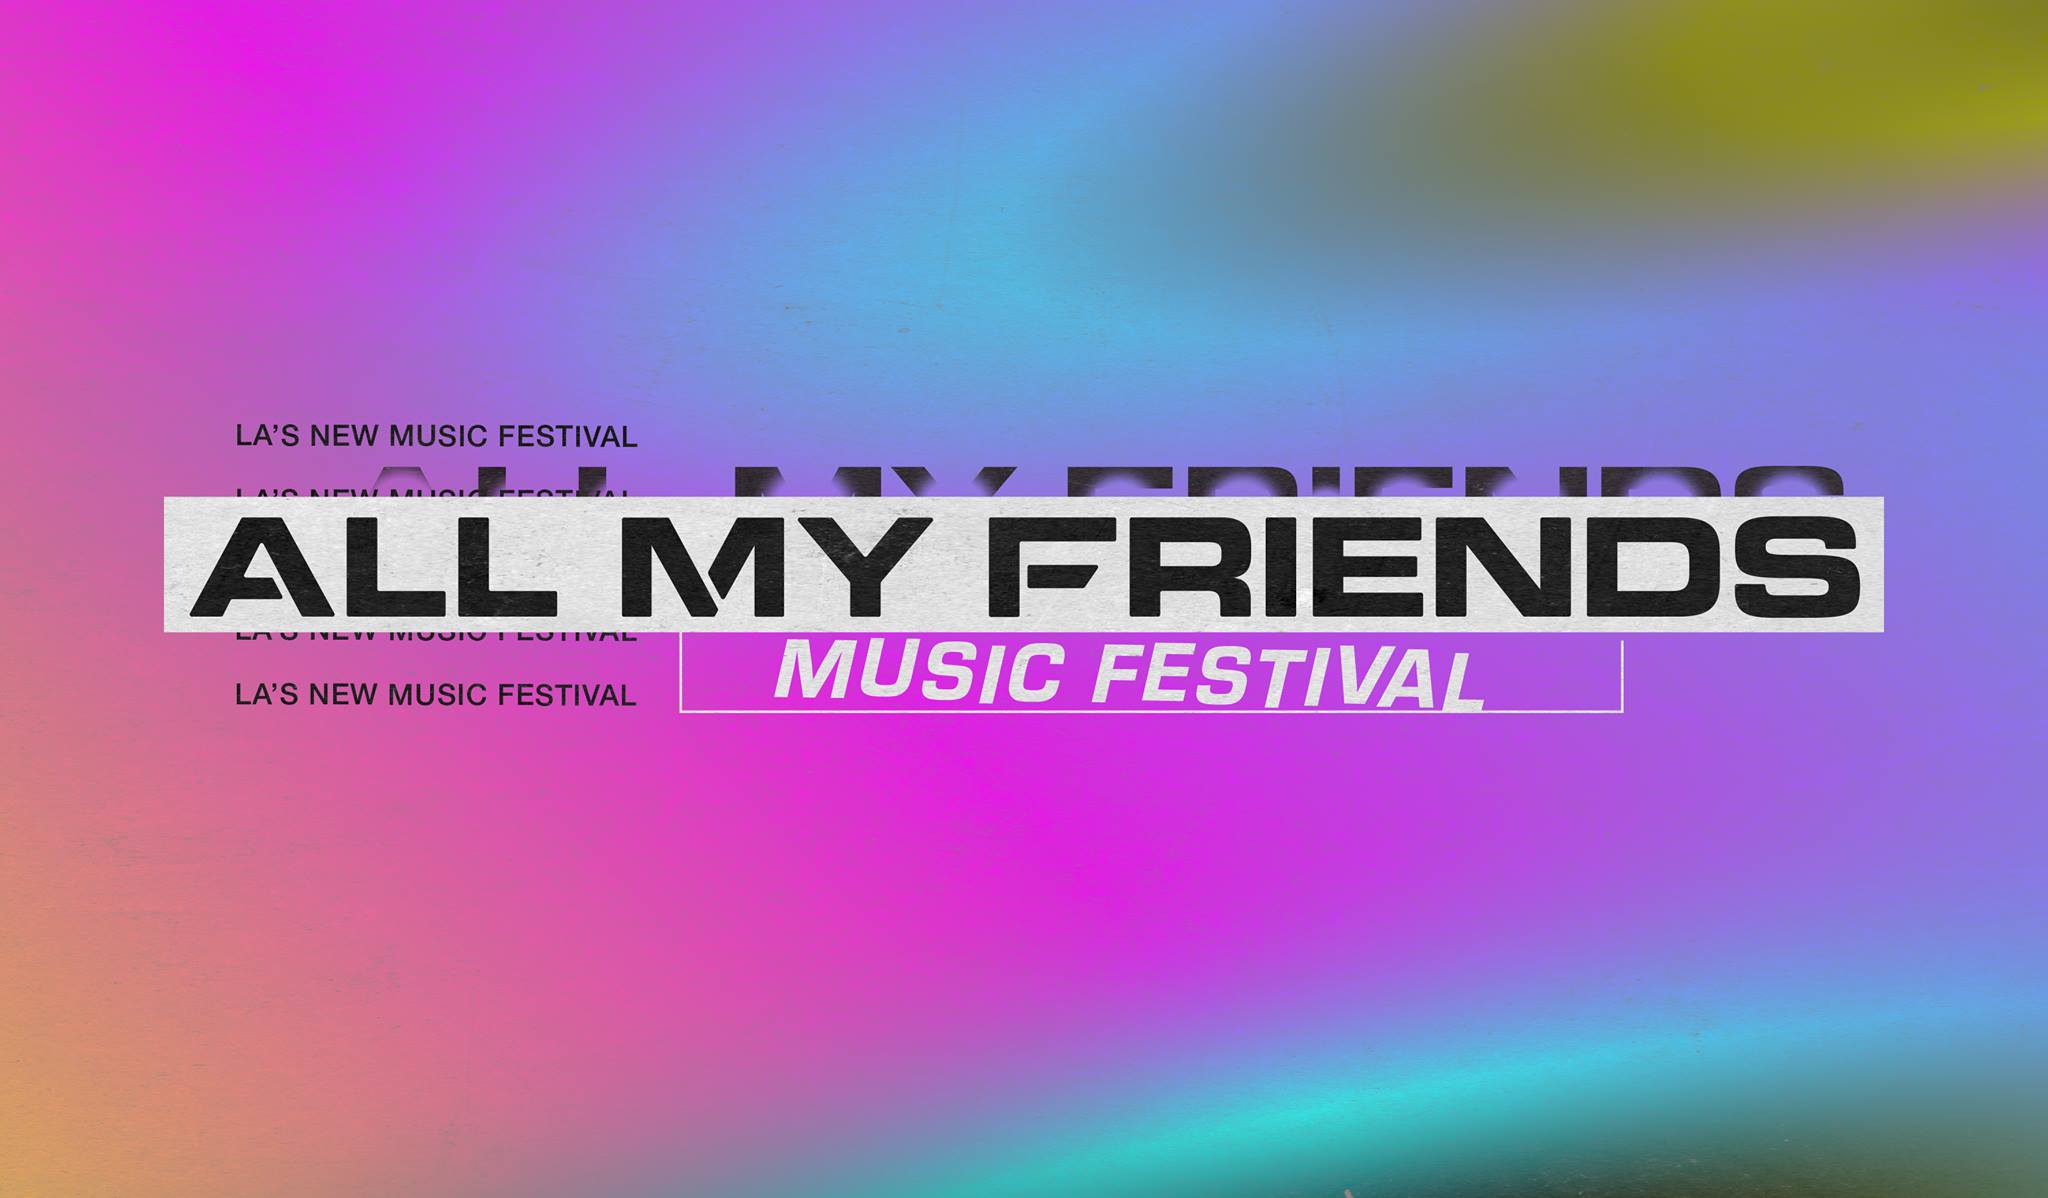 Destructo AMFAMFAMF Presents All My Friends Music Festival 2018